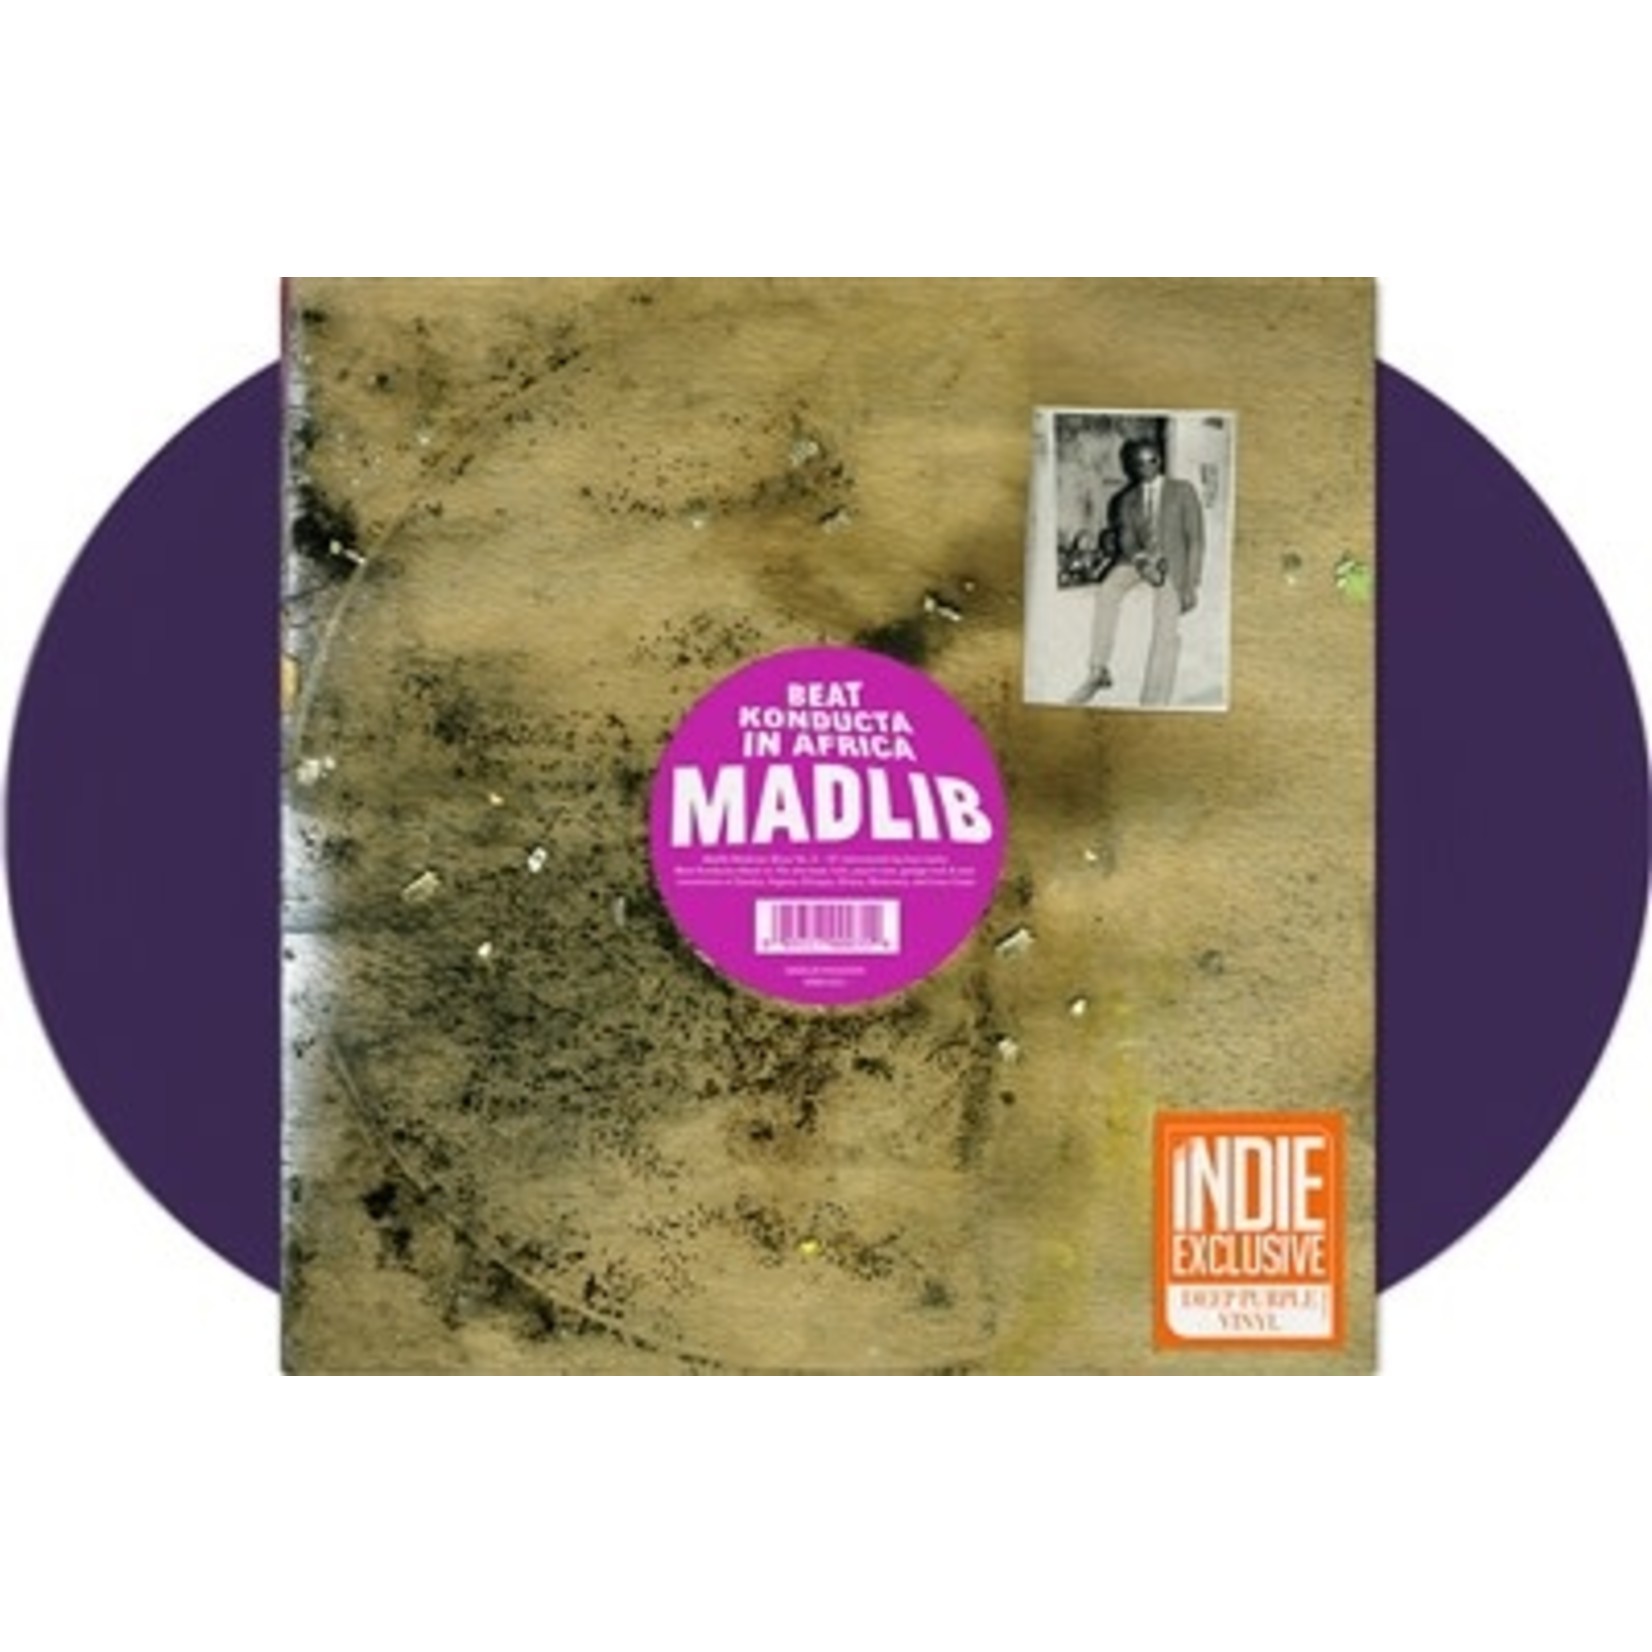 [New] Madlib - Medicine Show #3 - Beat Konducta in Africa (2LP, purple vinyl, limited edition)